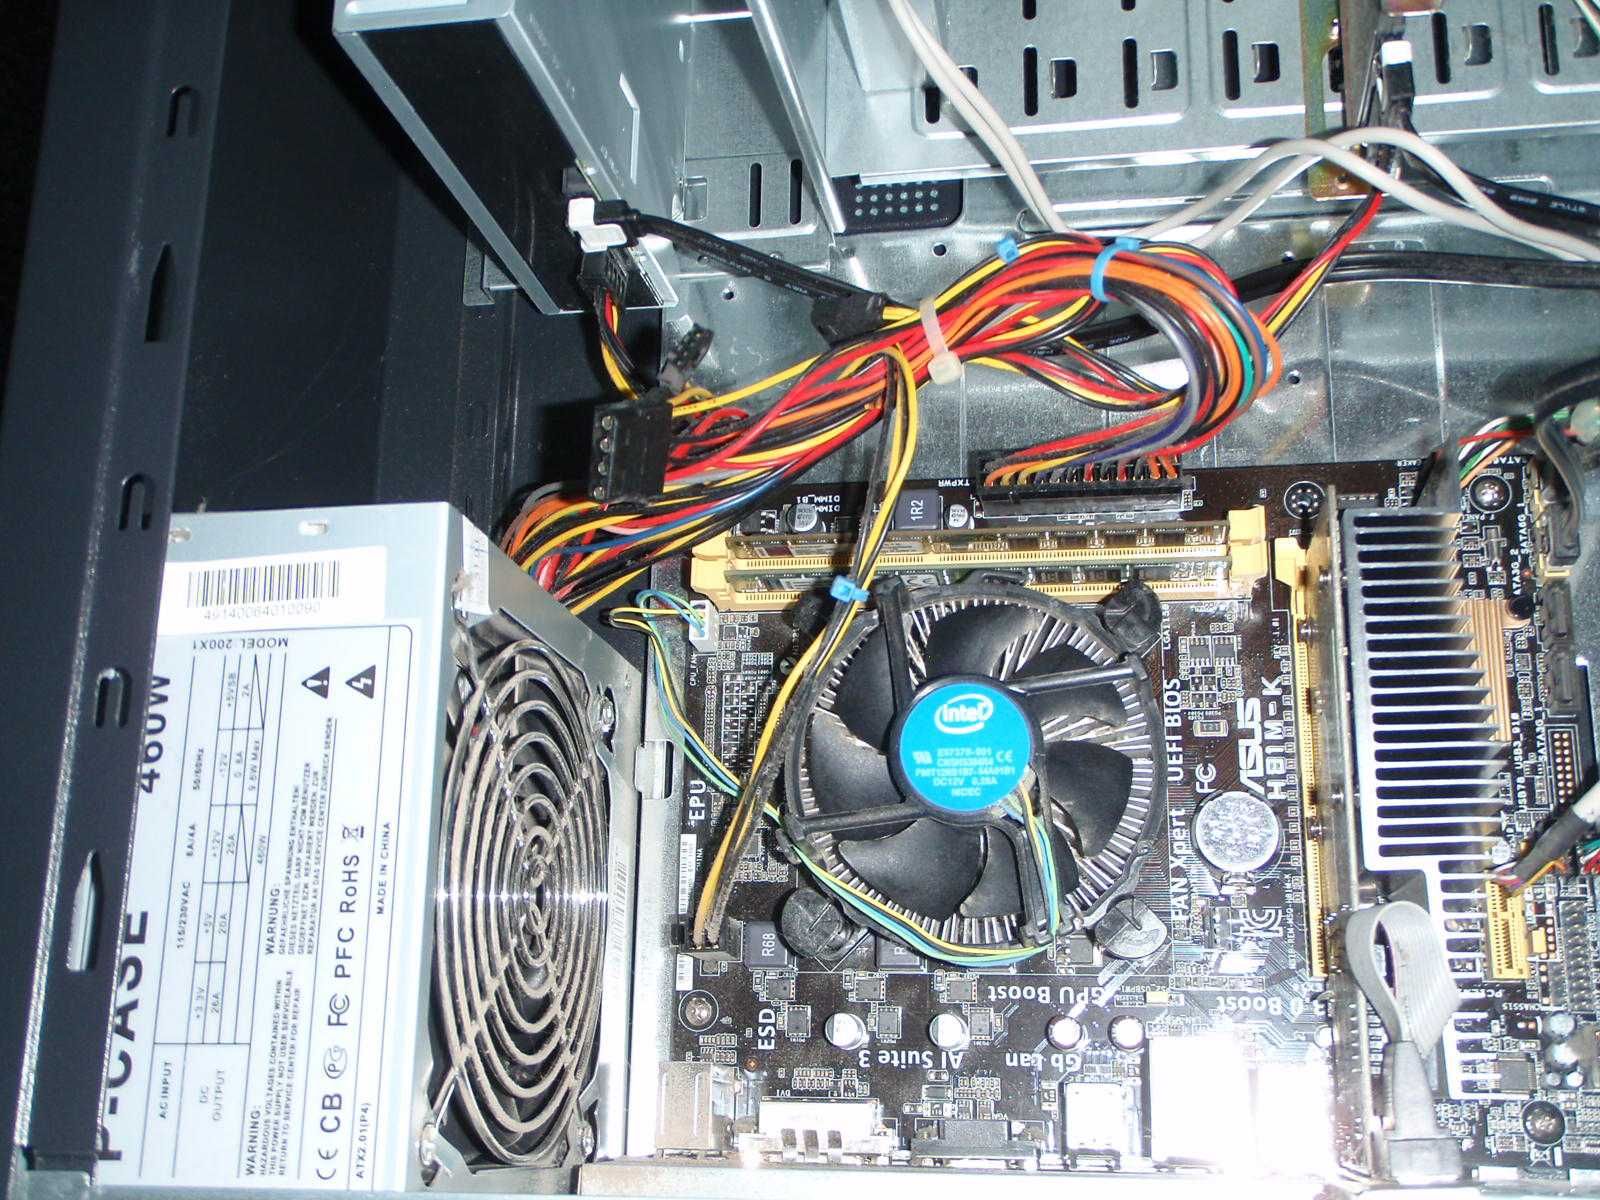 Komputer ASUS Intel Pentium G3260 3.30GHz, 240GB SSD, GeForce GT520